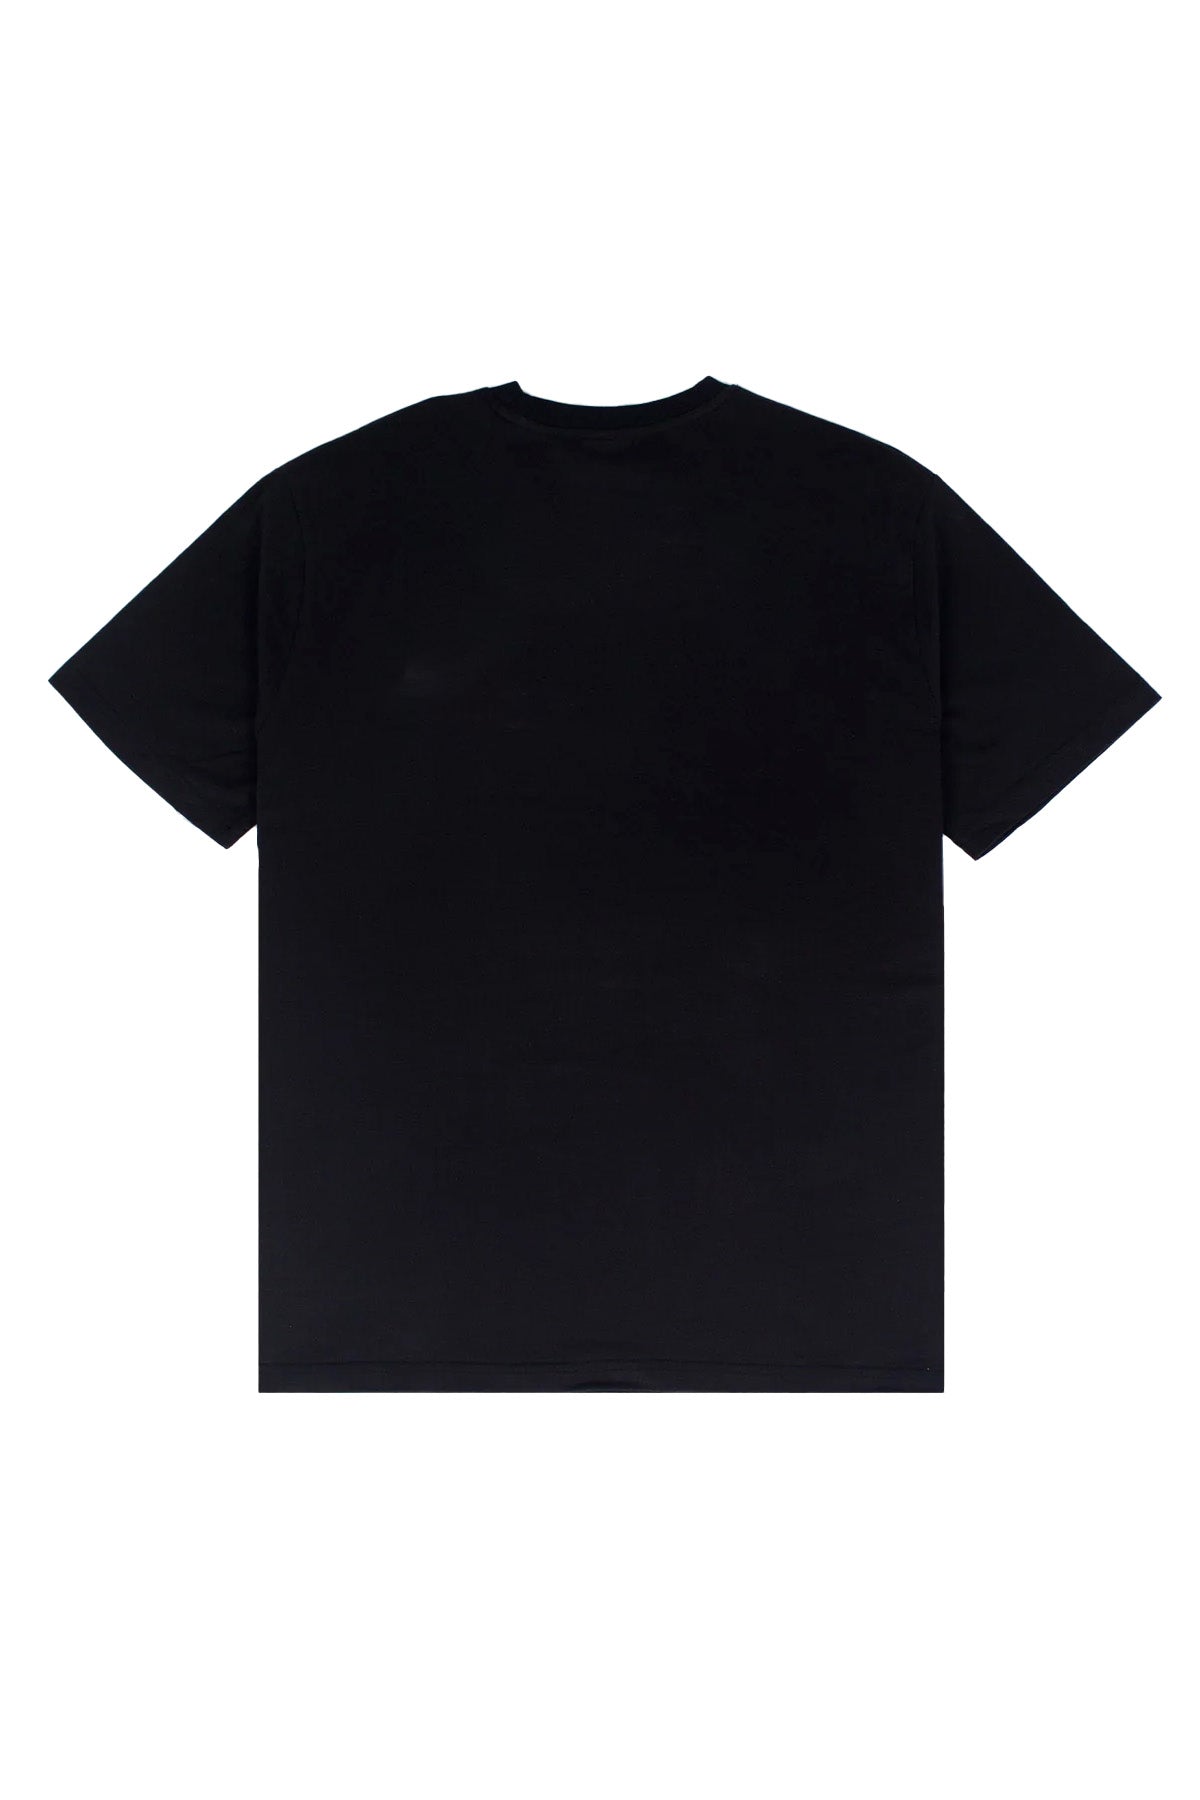 Men's Streetwear T-Shirts | Pestle & Mortar Clothing Malaysia